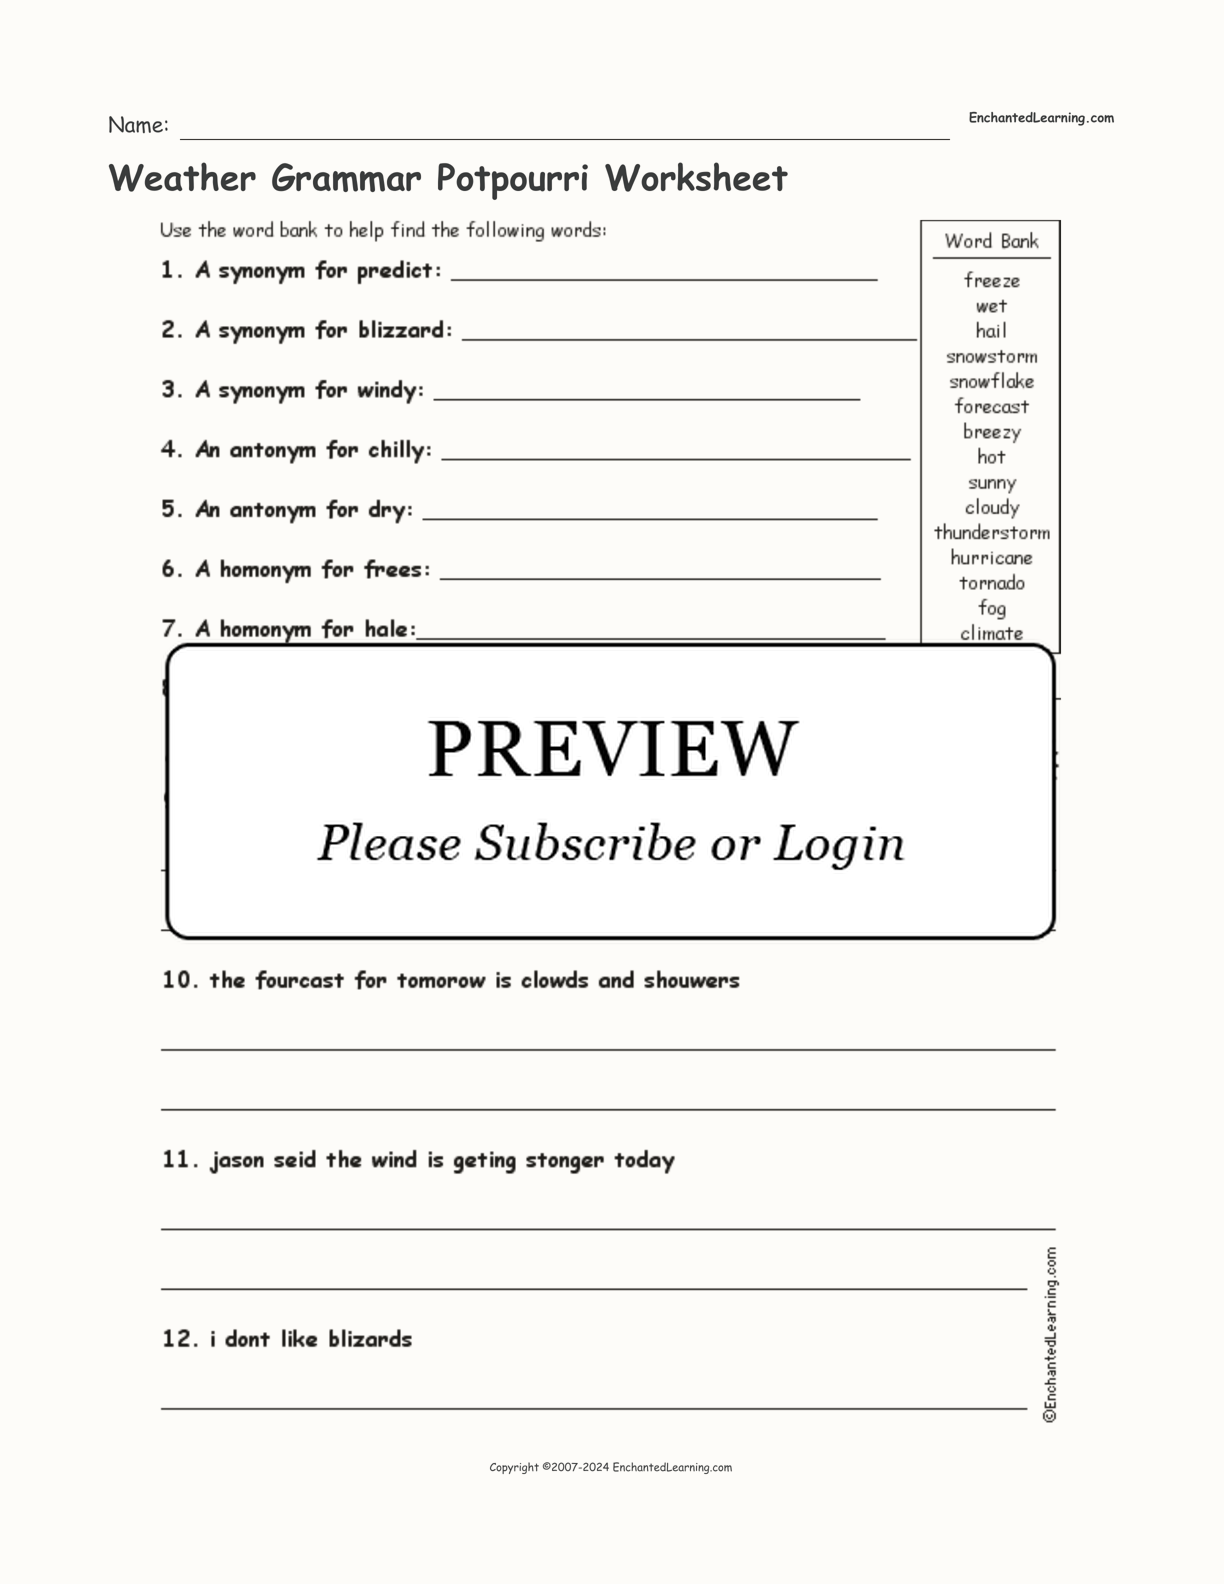 Weather Grammar Potpourri Worksheet interactive worksheet page 1